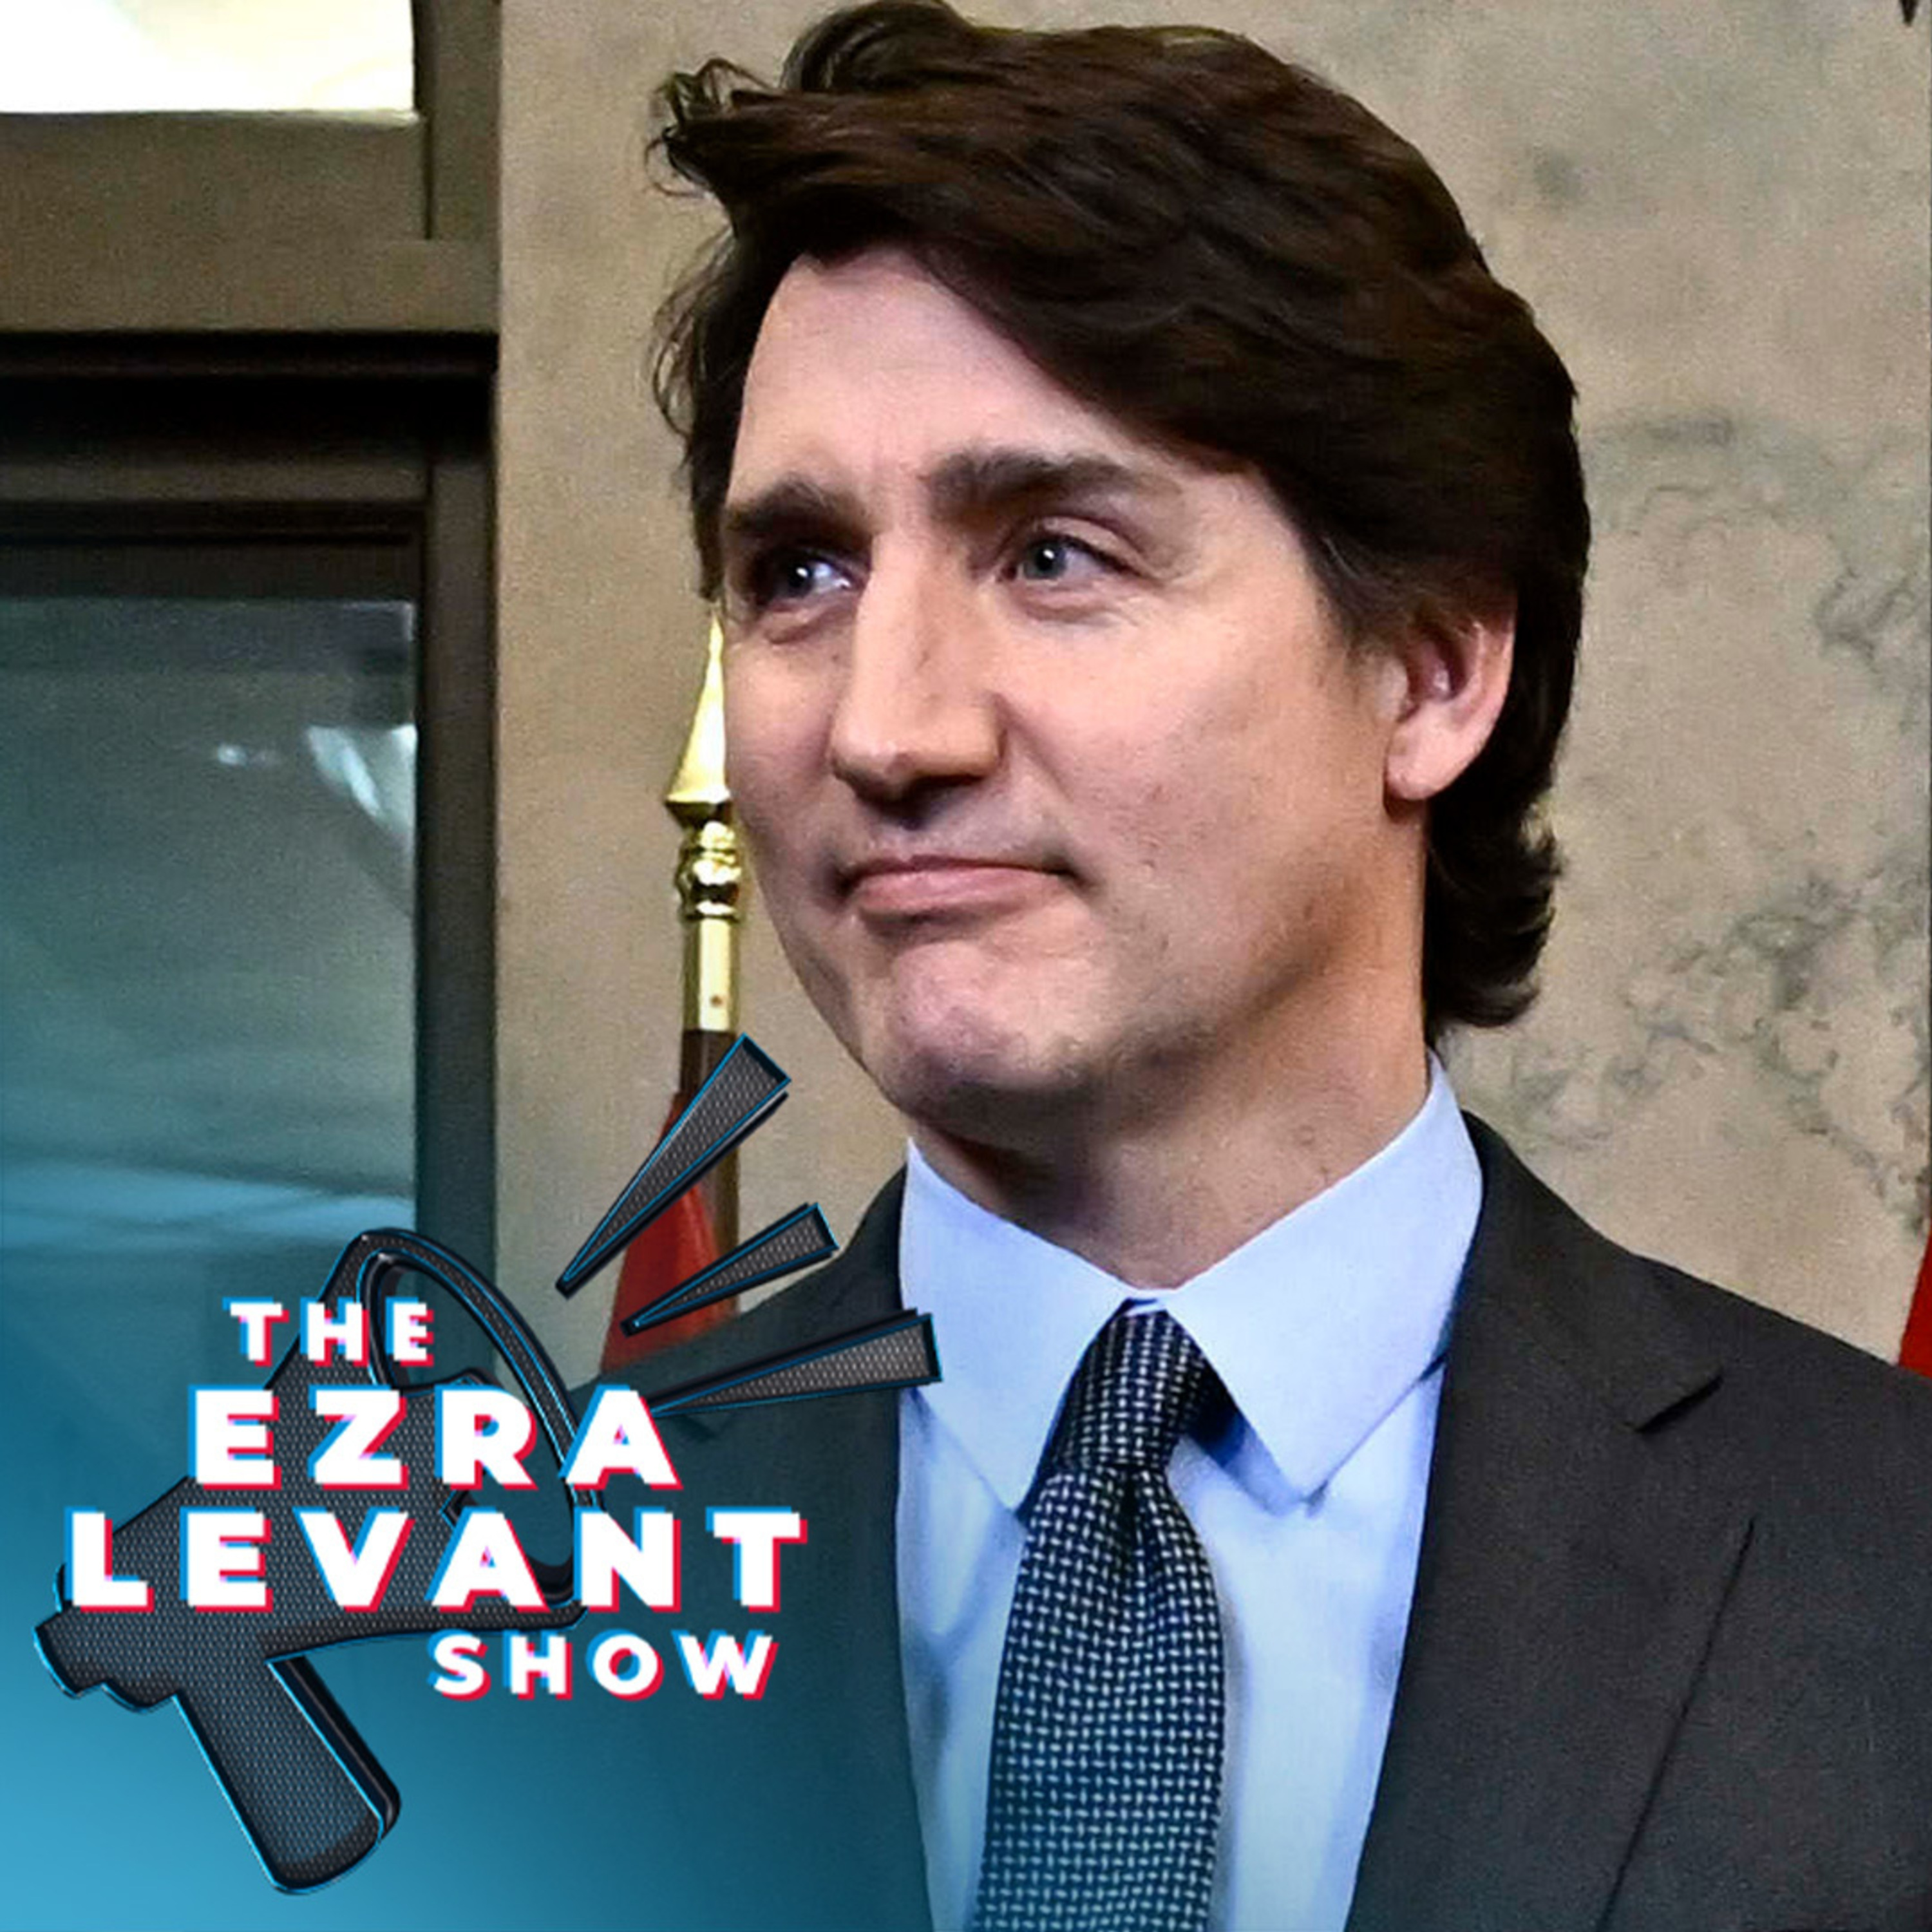 EZRA LEVANT | Trudeau's exhaustive lip service no longer resonates with Canada's youth